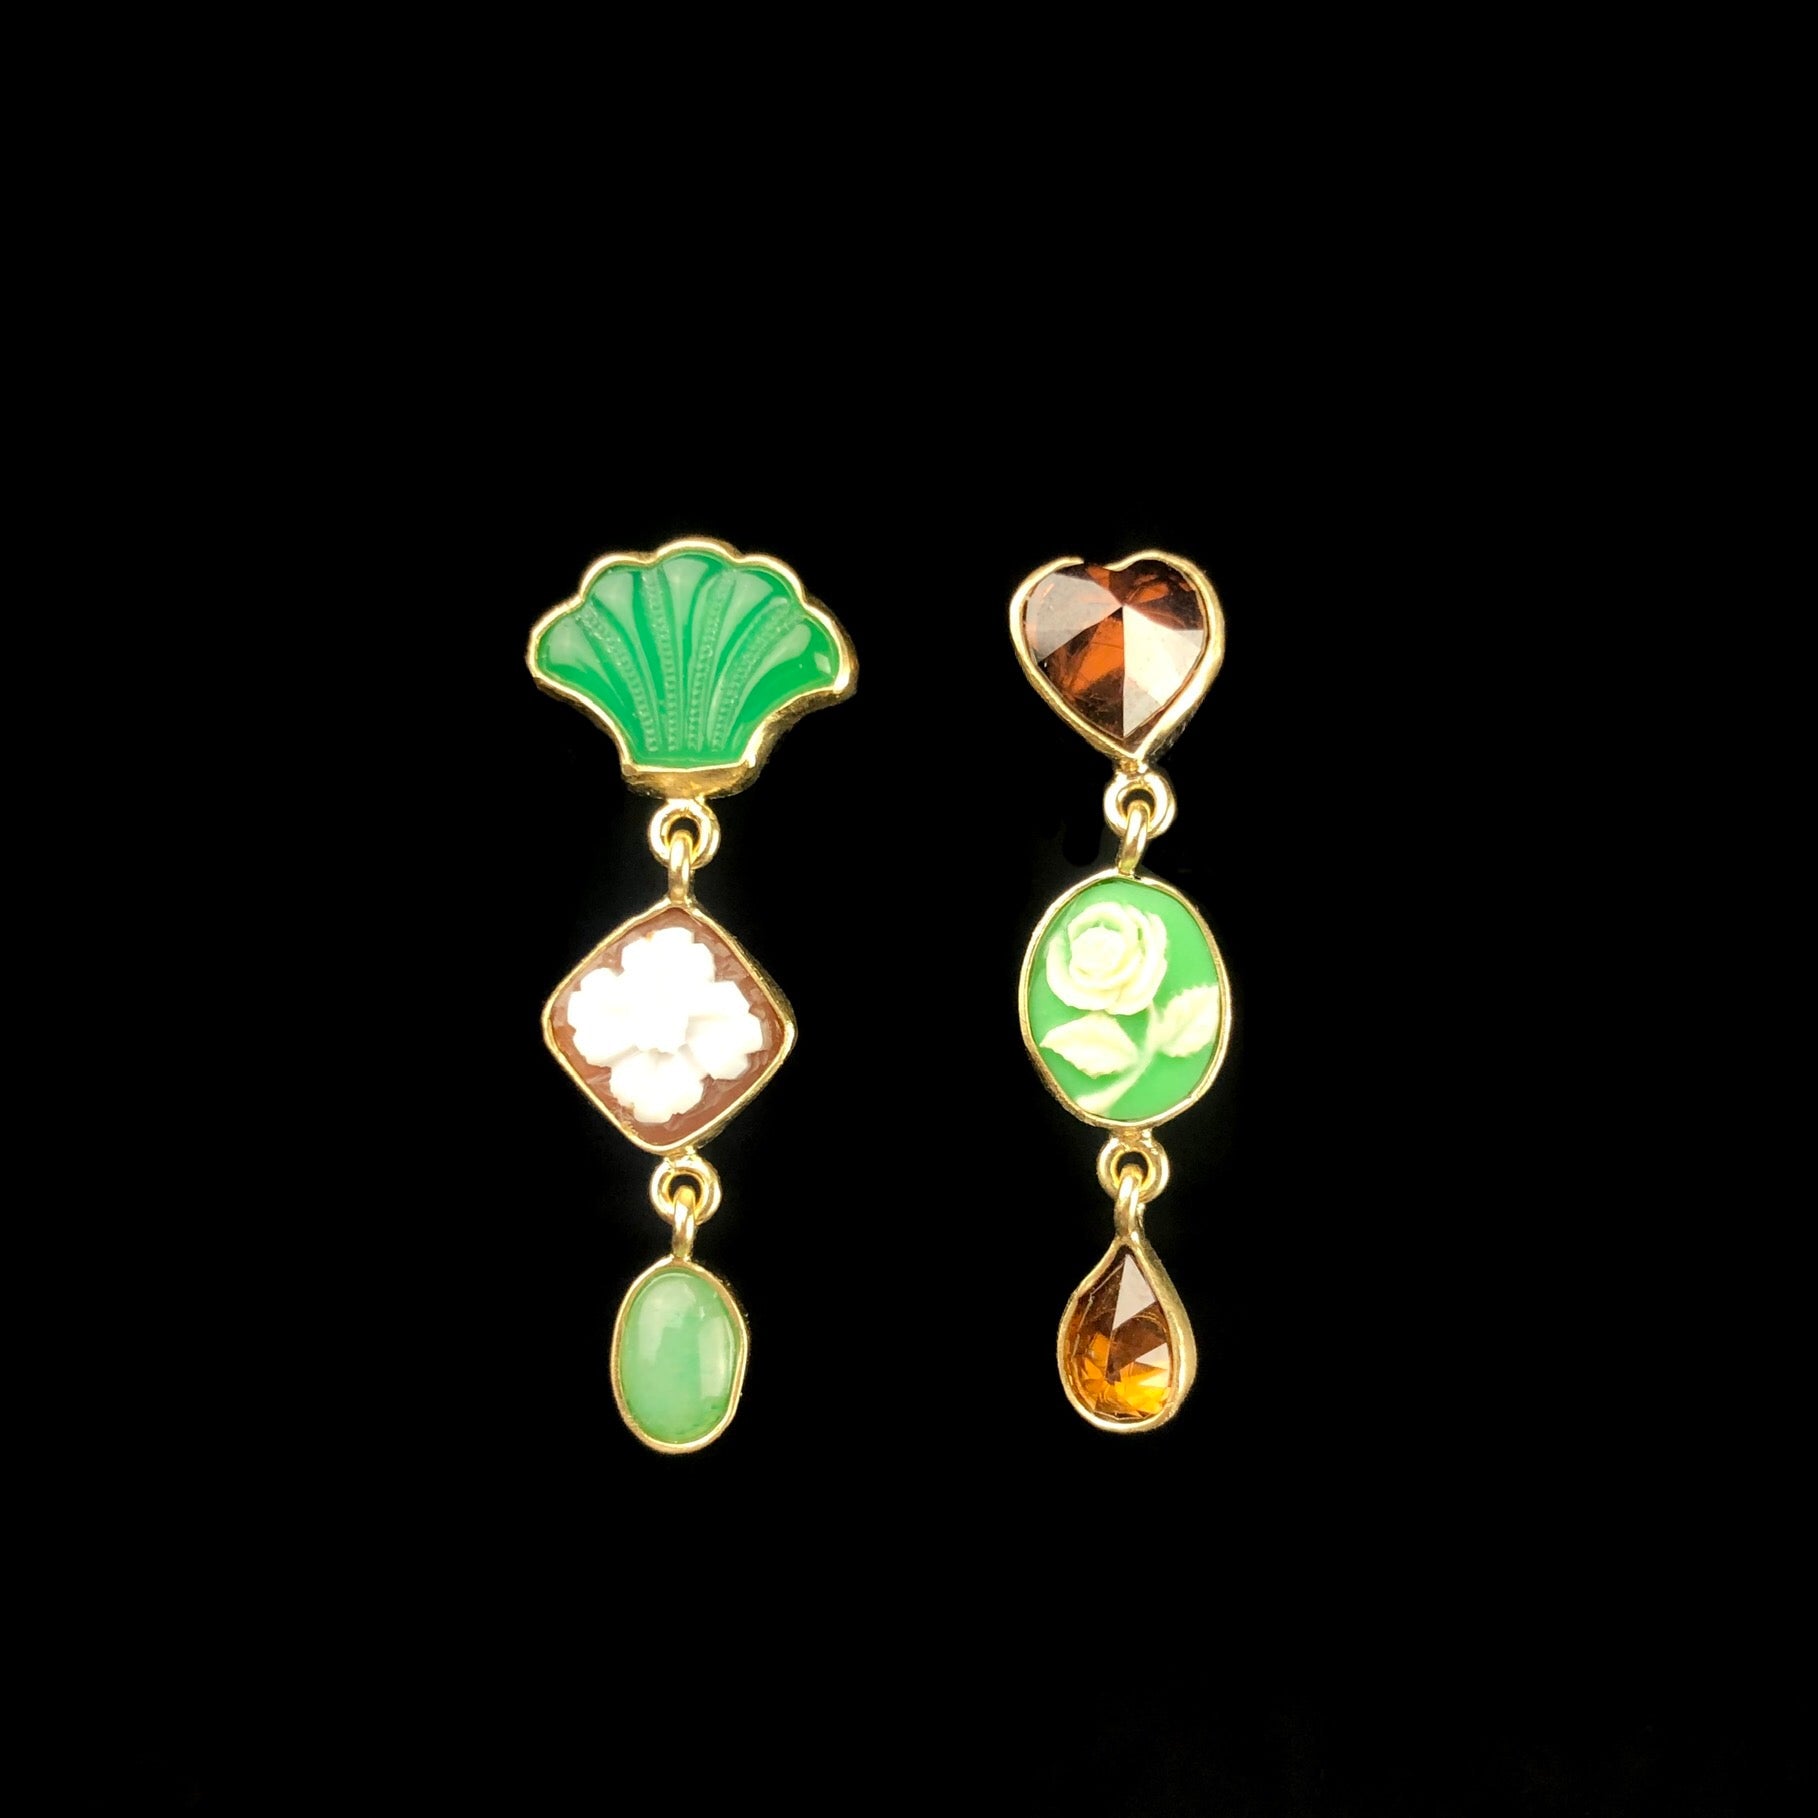 Three Charm Green Rose Stud Earrings side by side